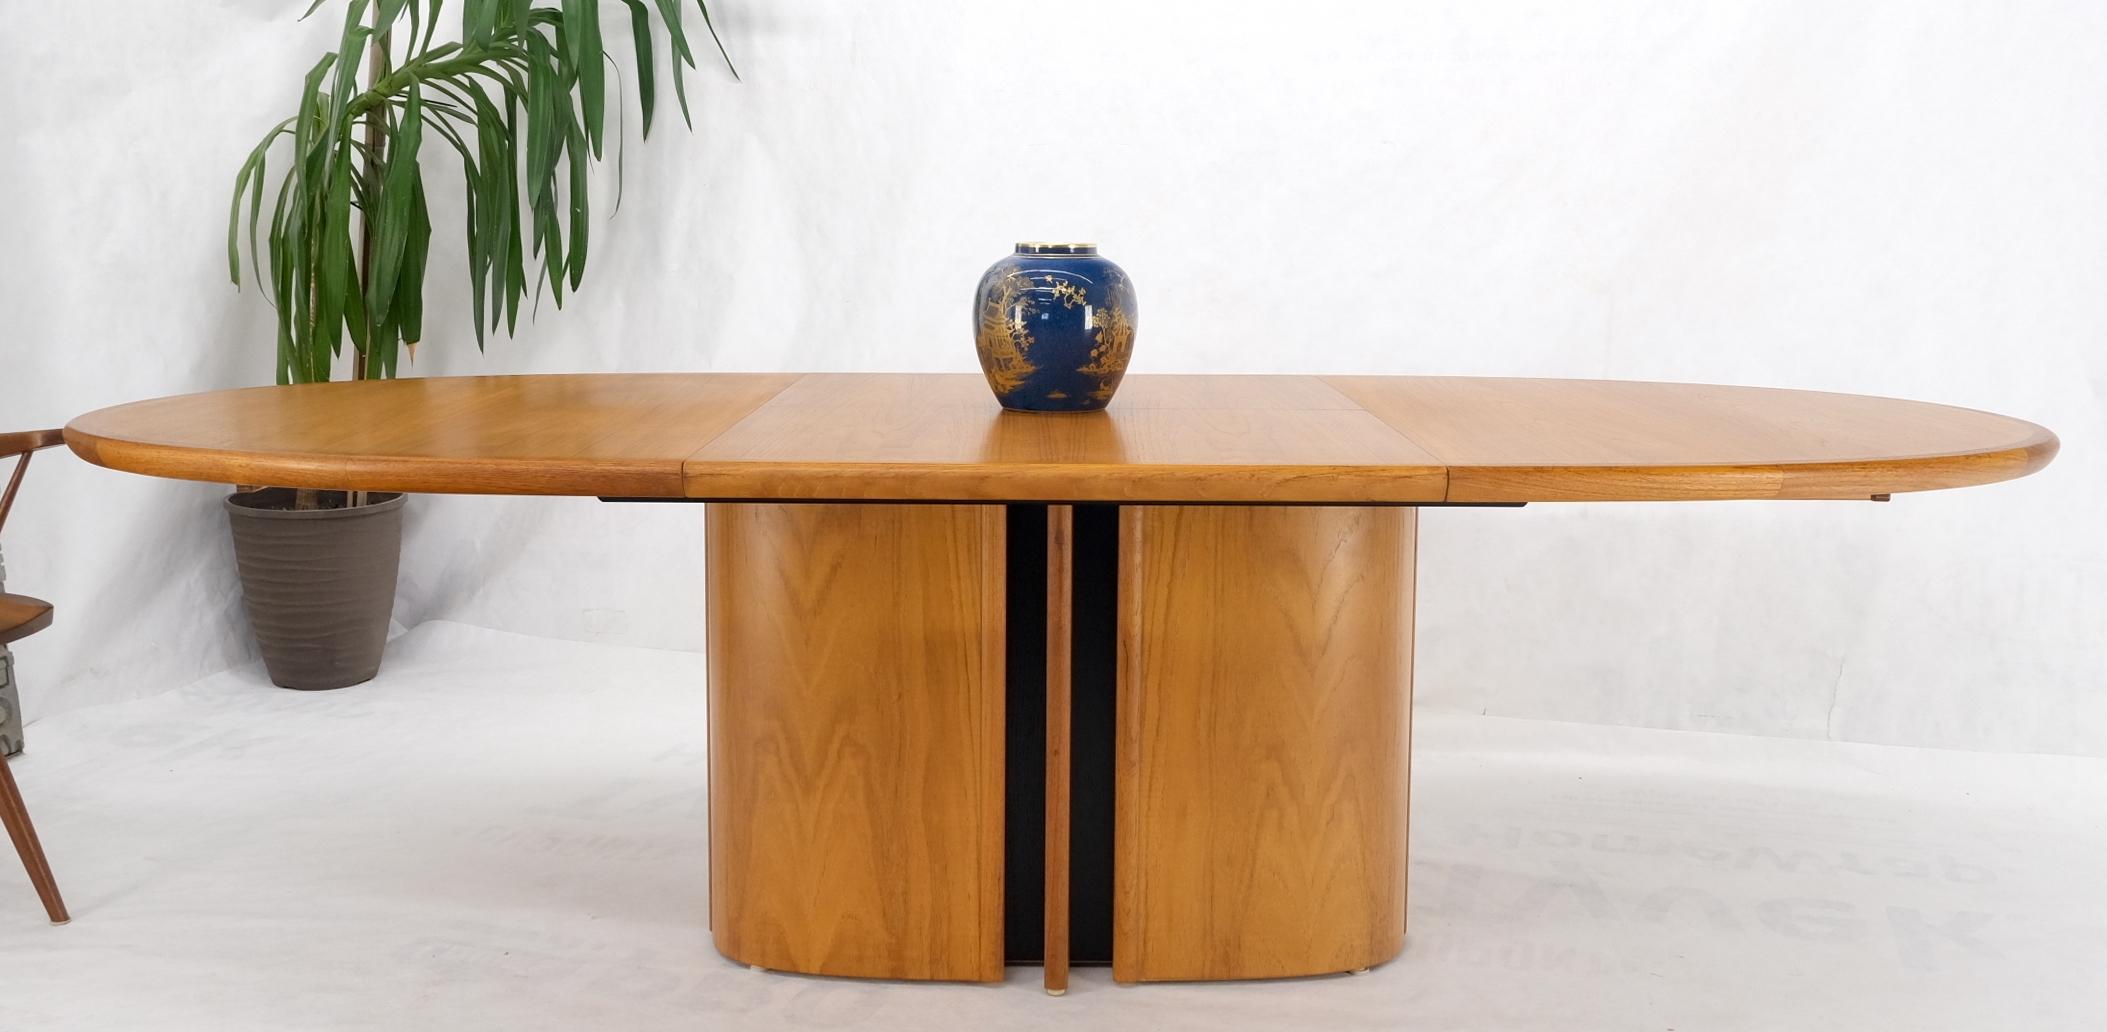 Danish Mid-Century Modern Oval Teak Dining Table w/ Pop Up Leaf Extension MINT! 15